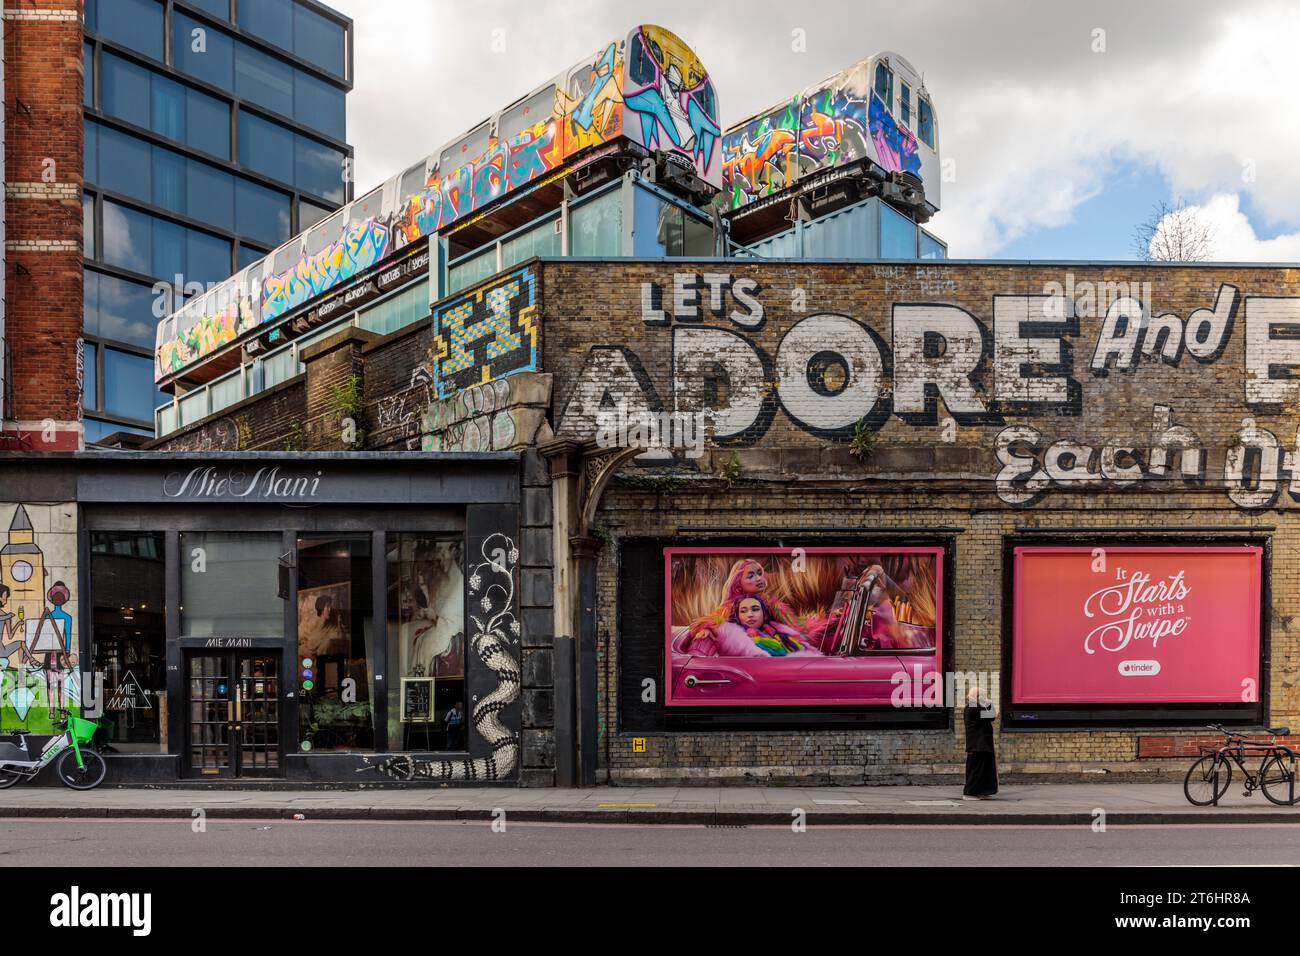 Hausfassade, Graffiti, Lets adore, Shoerditch, East London, London, Großbritannien, Großbritannien Stockfoto